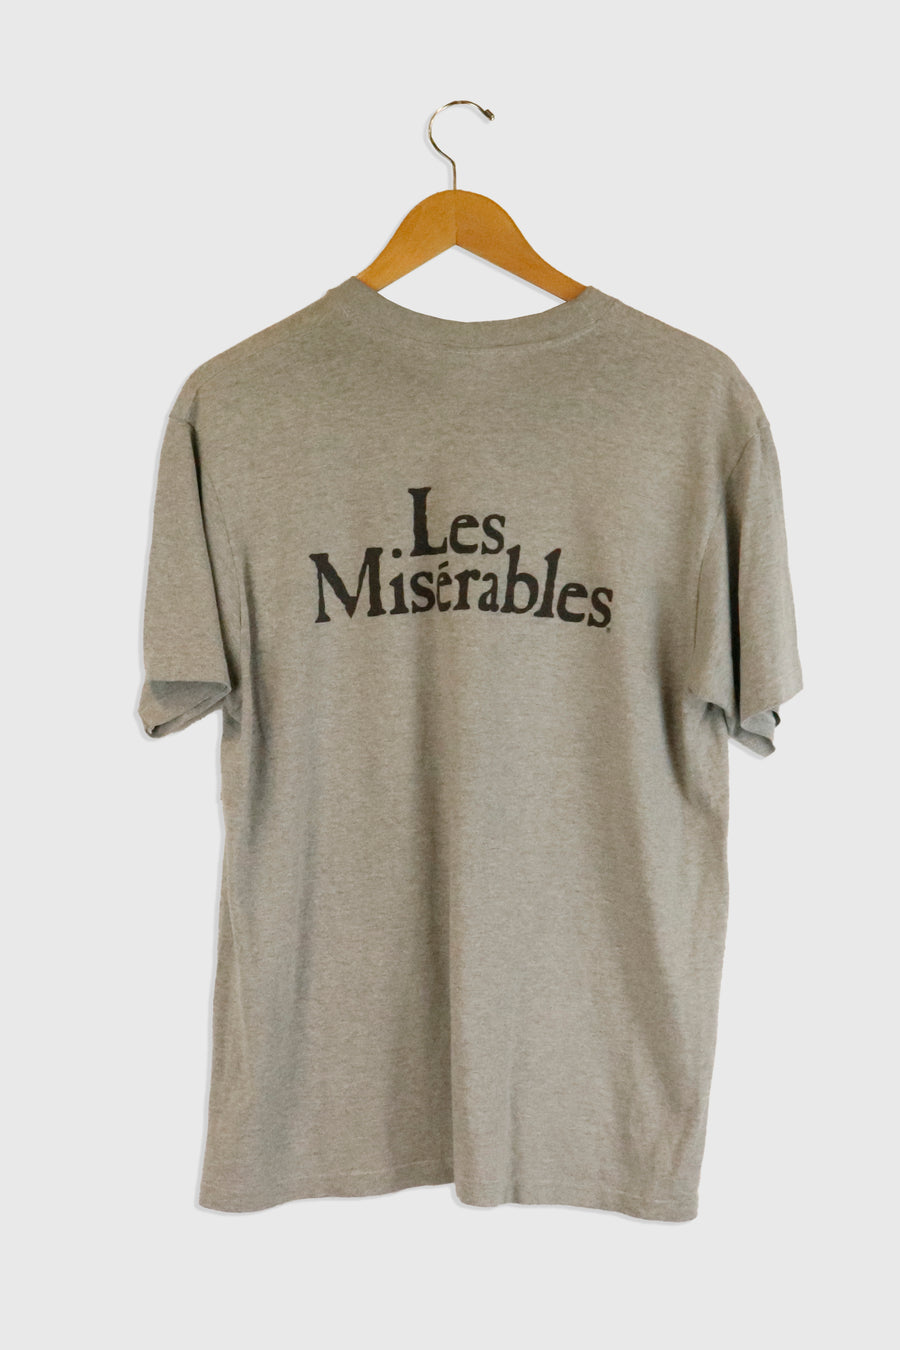 Vintage Les Miserables Sad Girl T Shirt Sz XL